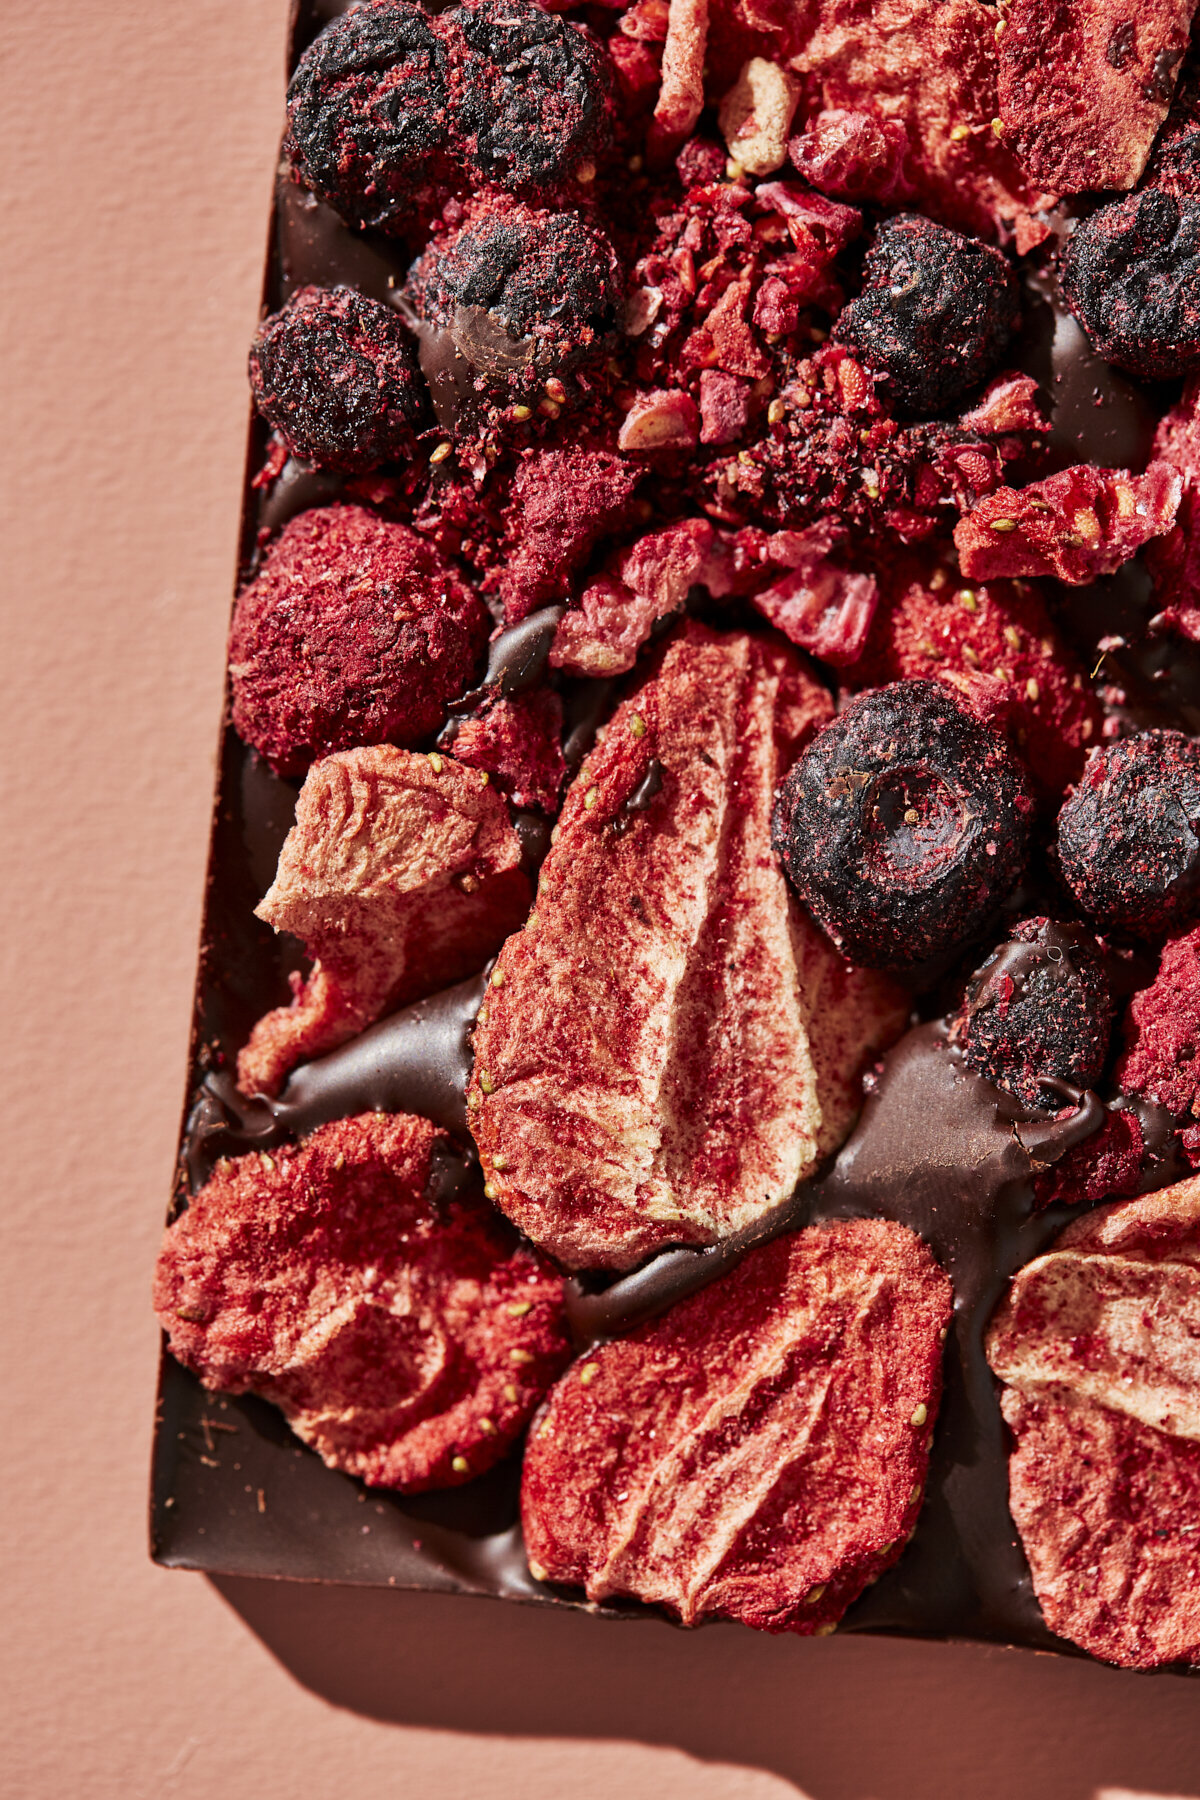 Dark Chocolate Mixed Berries / Jennifer Chong - Food Photographer